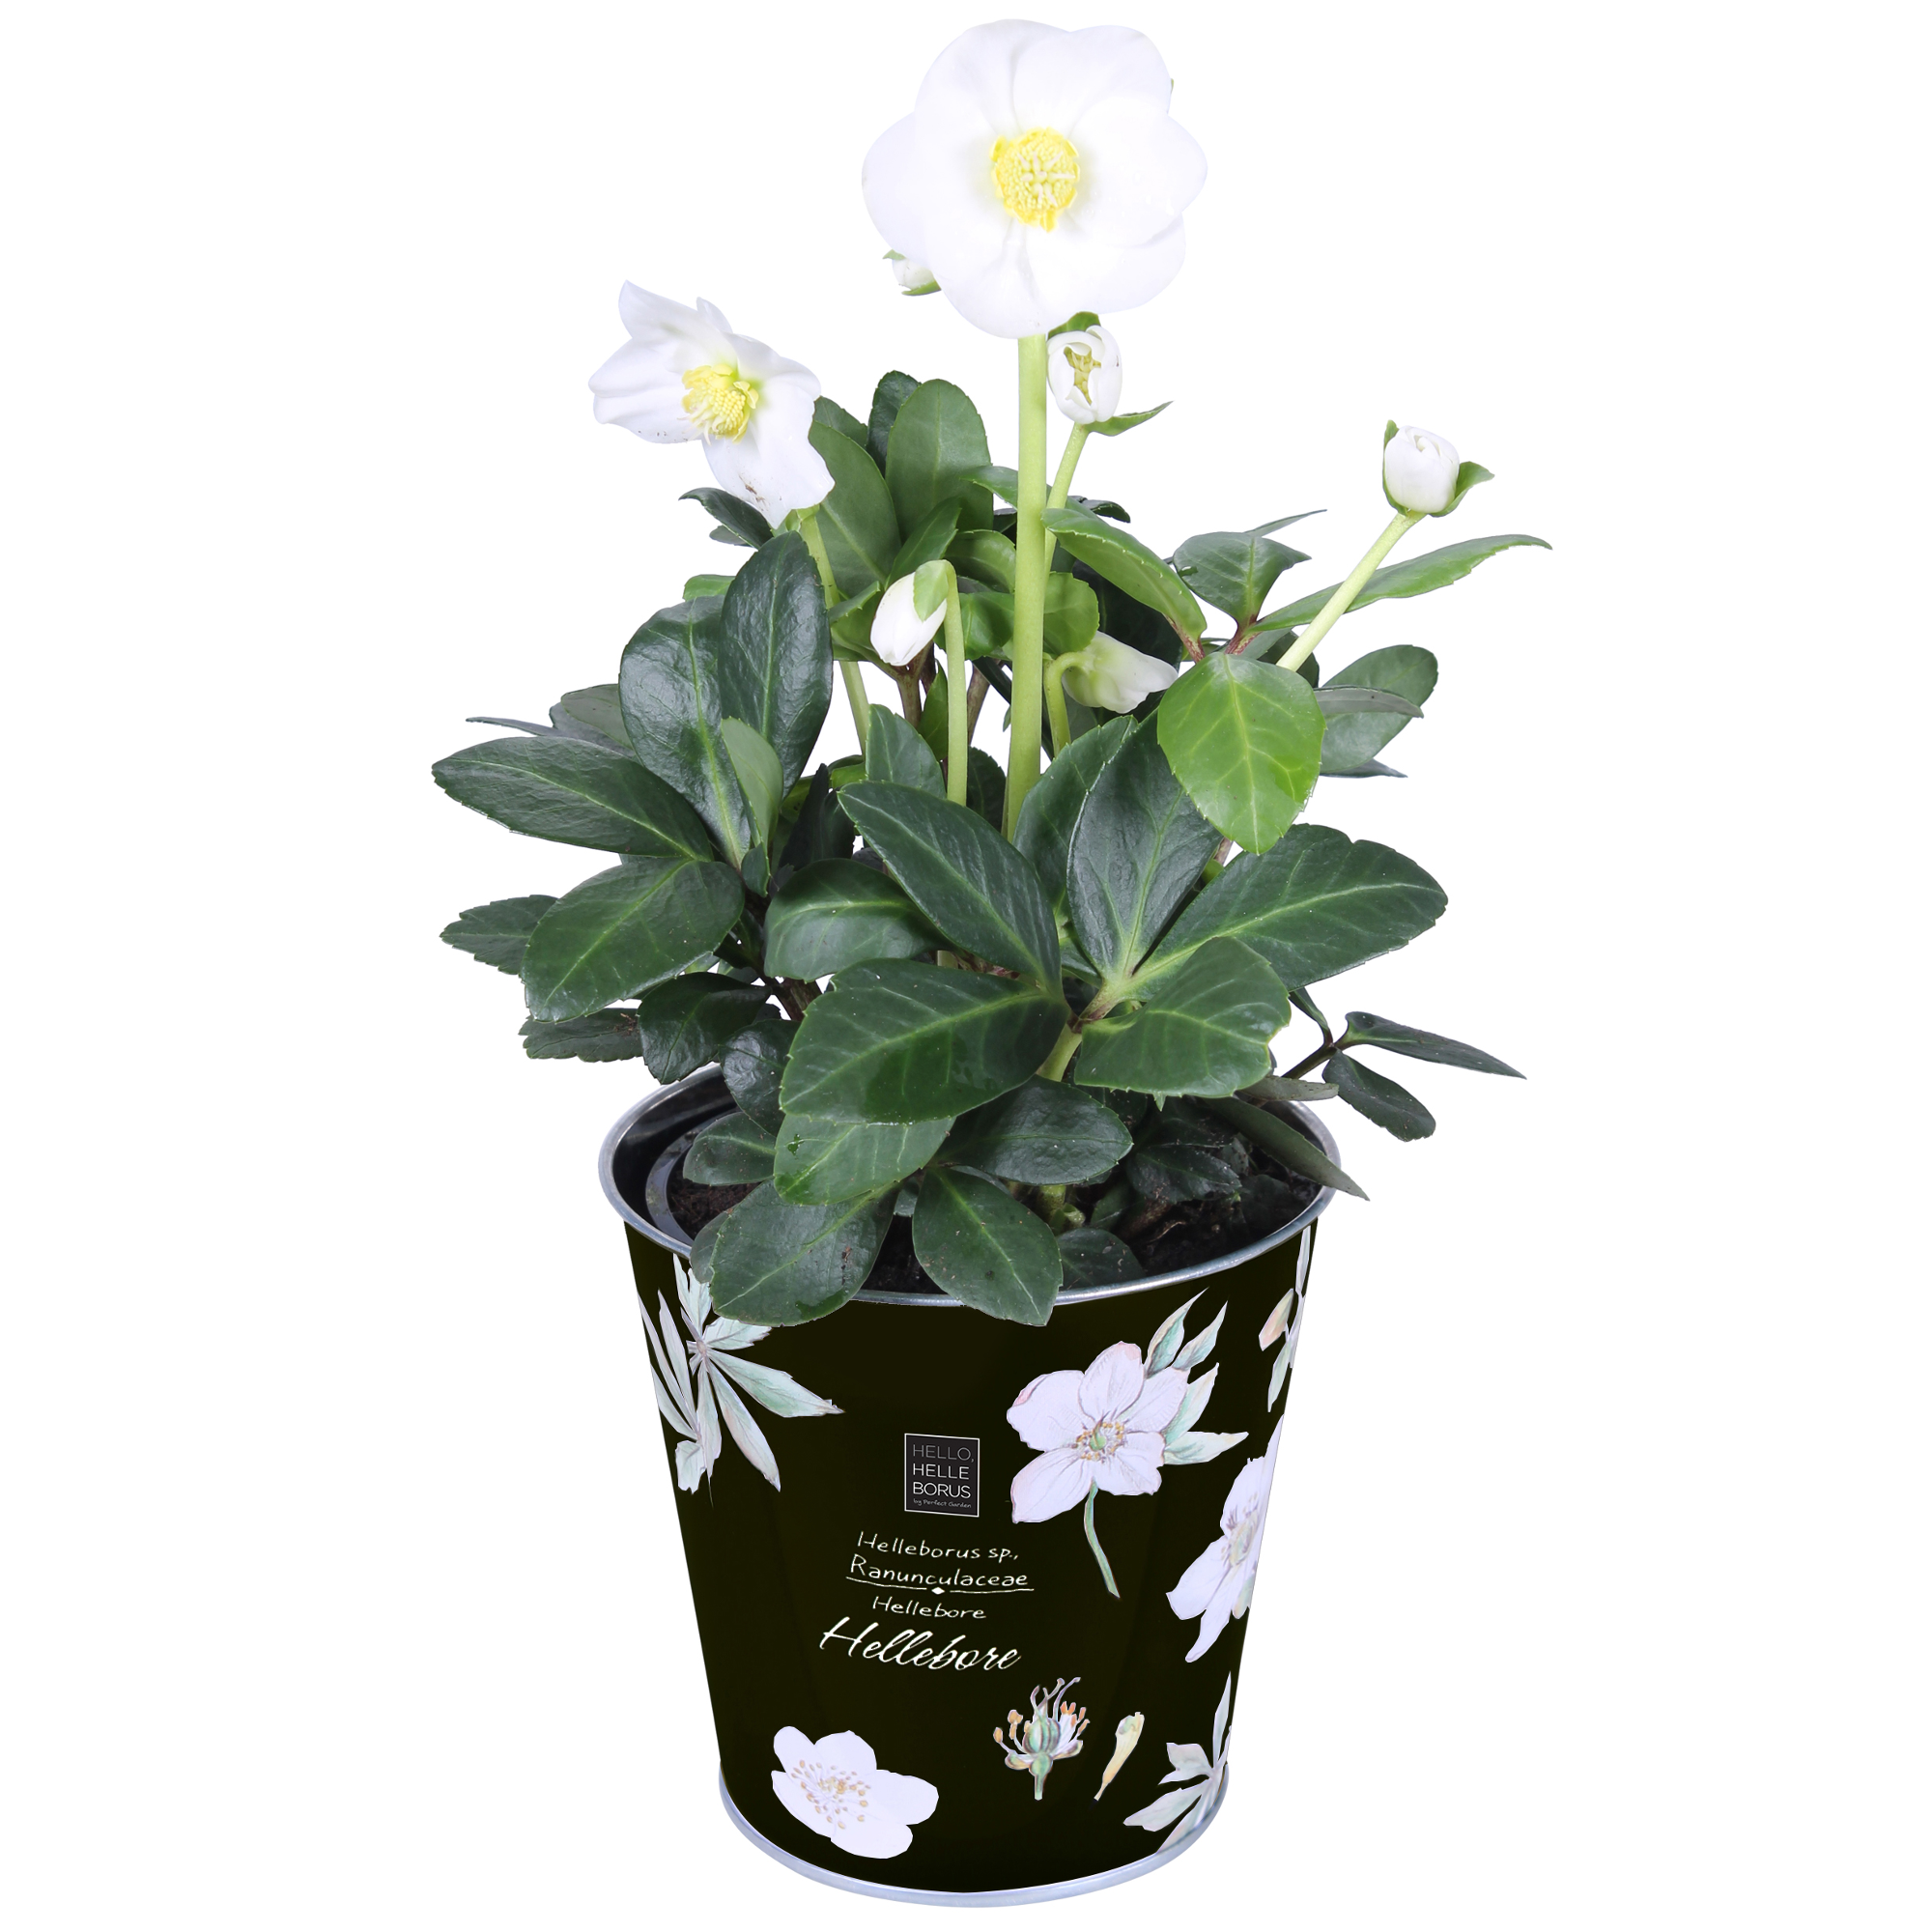 Christrose im Zinktopf Botanical, 12 cm Topf + product picture